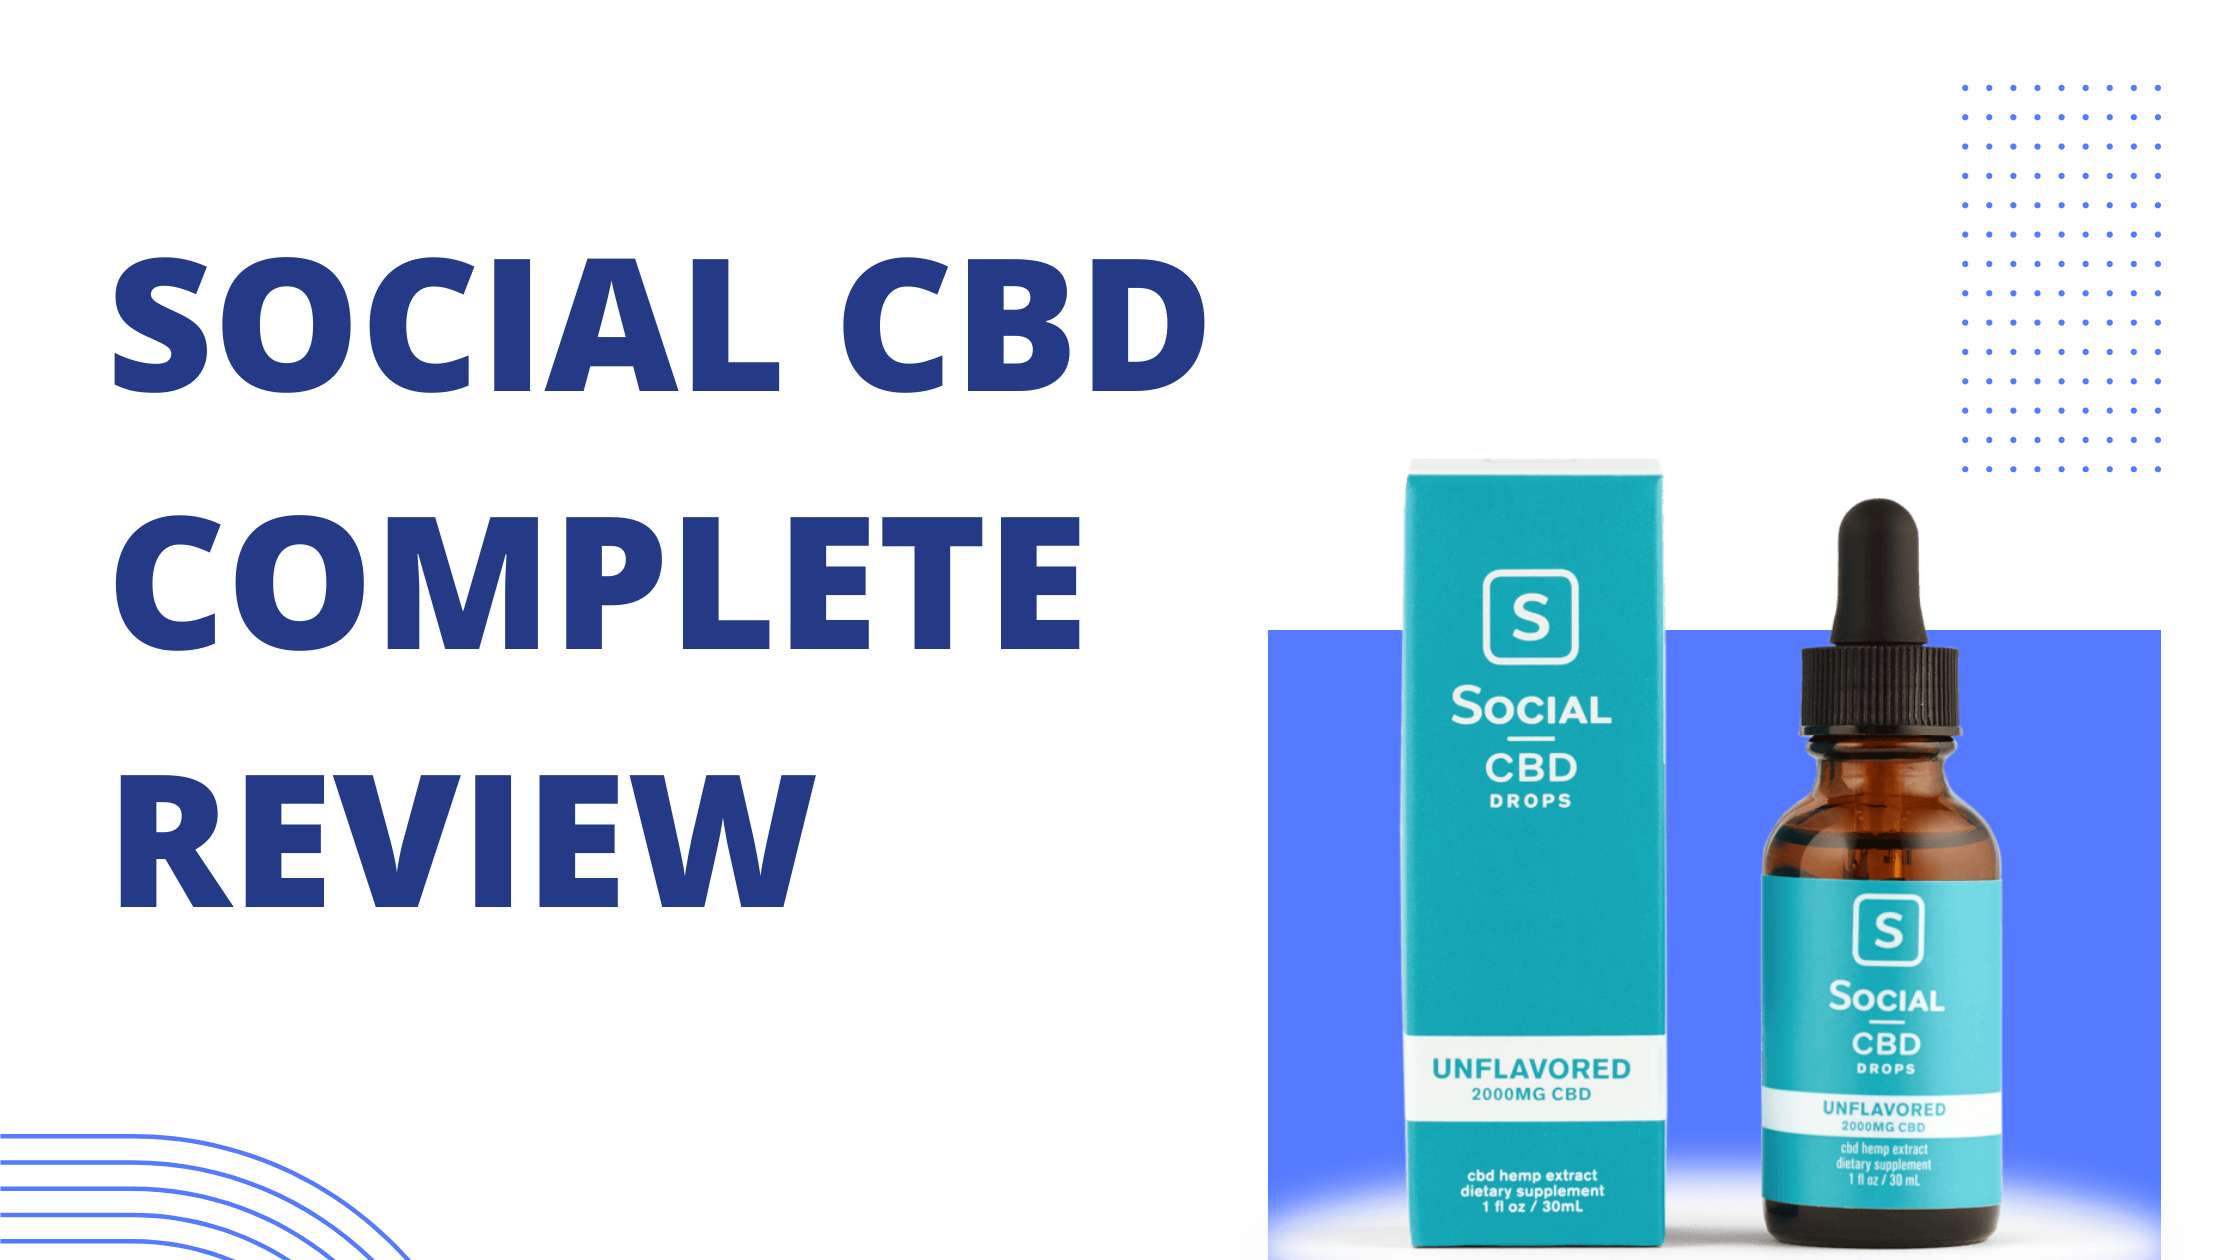 Social CBD Complete Review